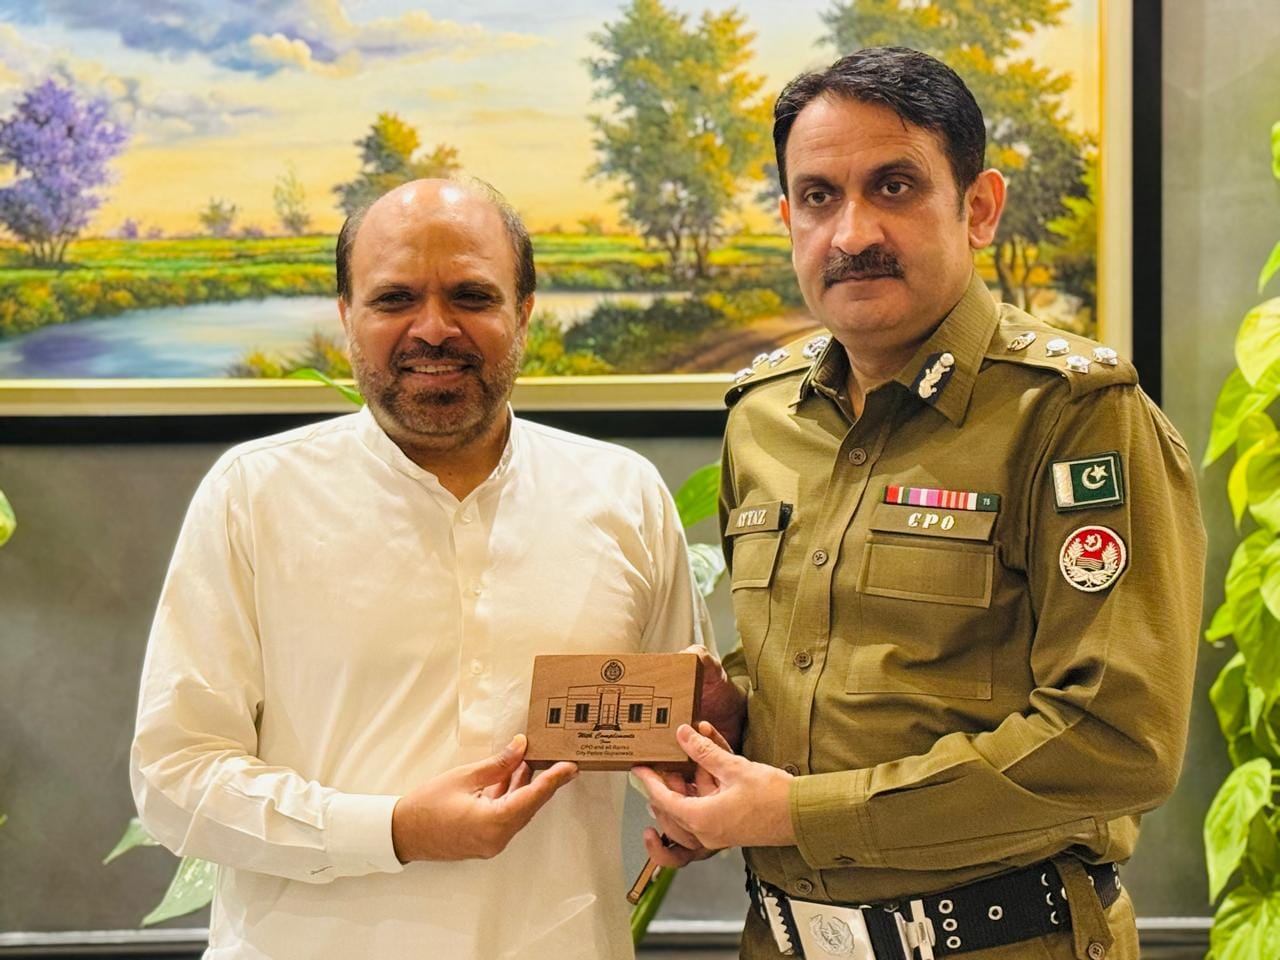 City Police Officer presented souvenir to Former SVP GCCI